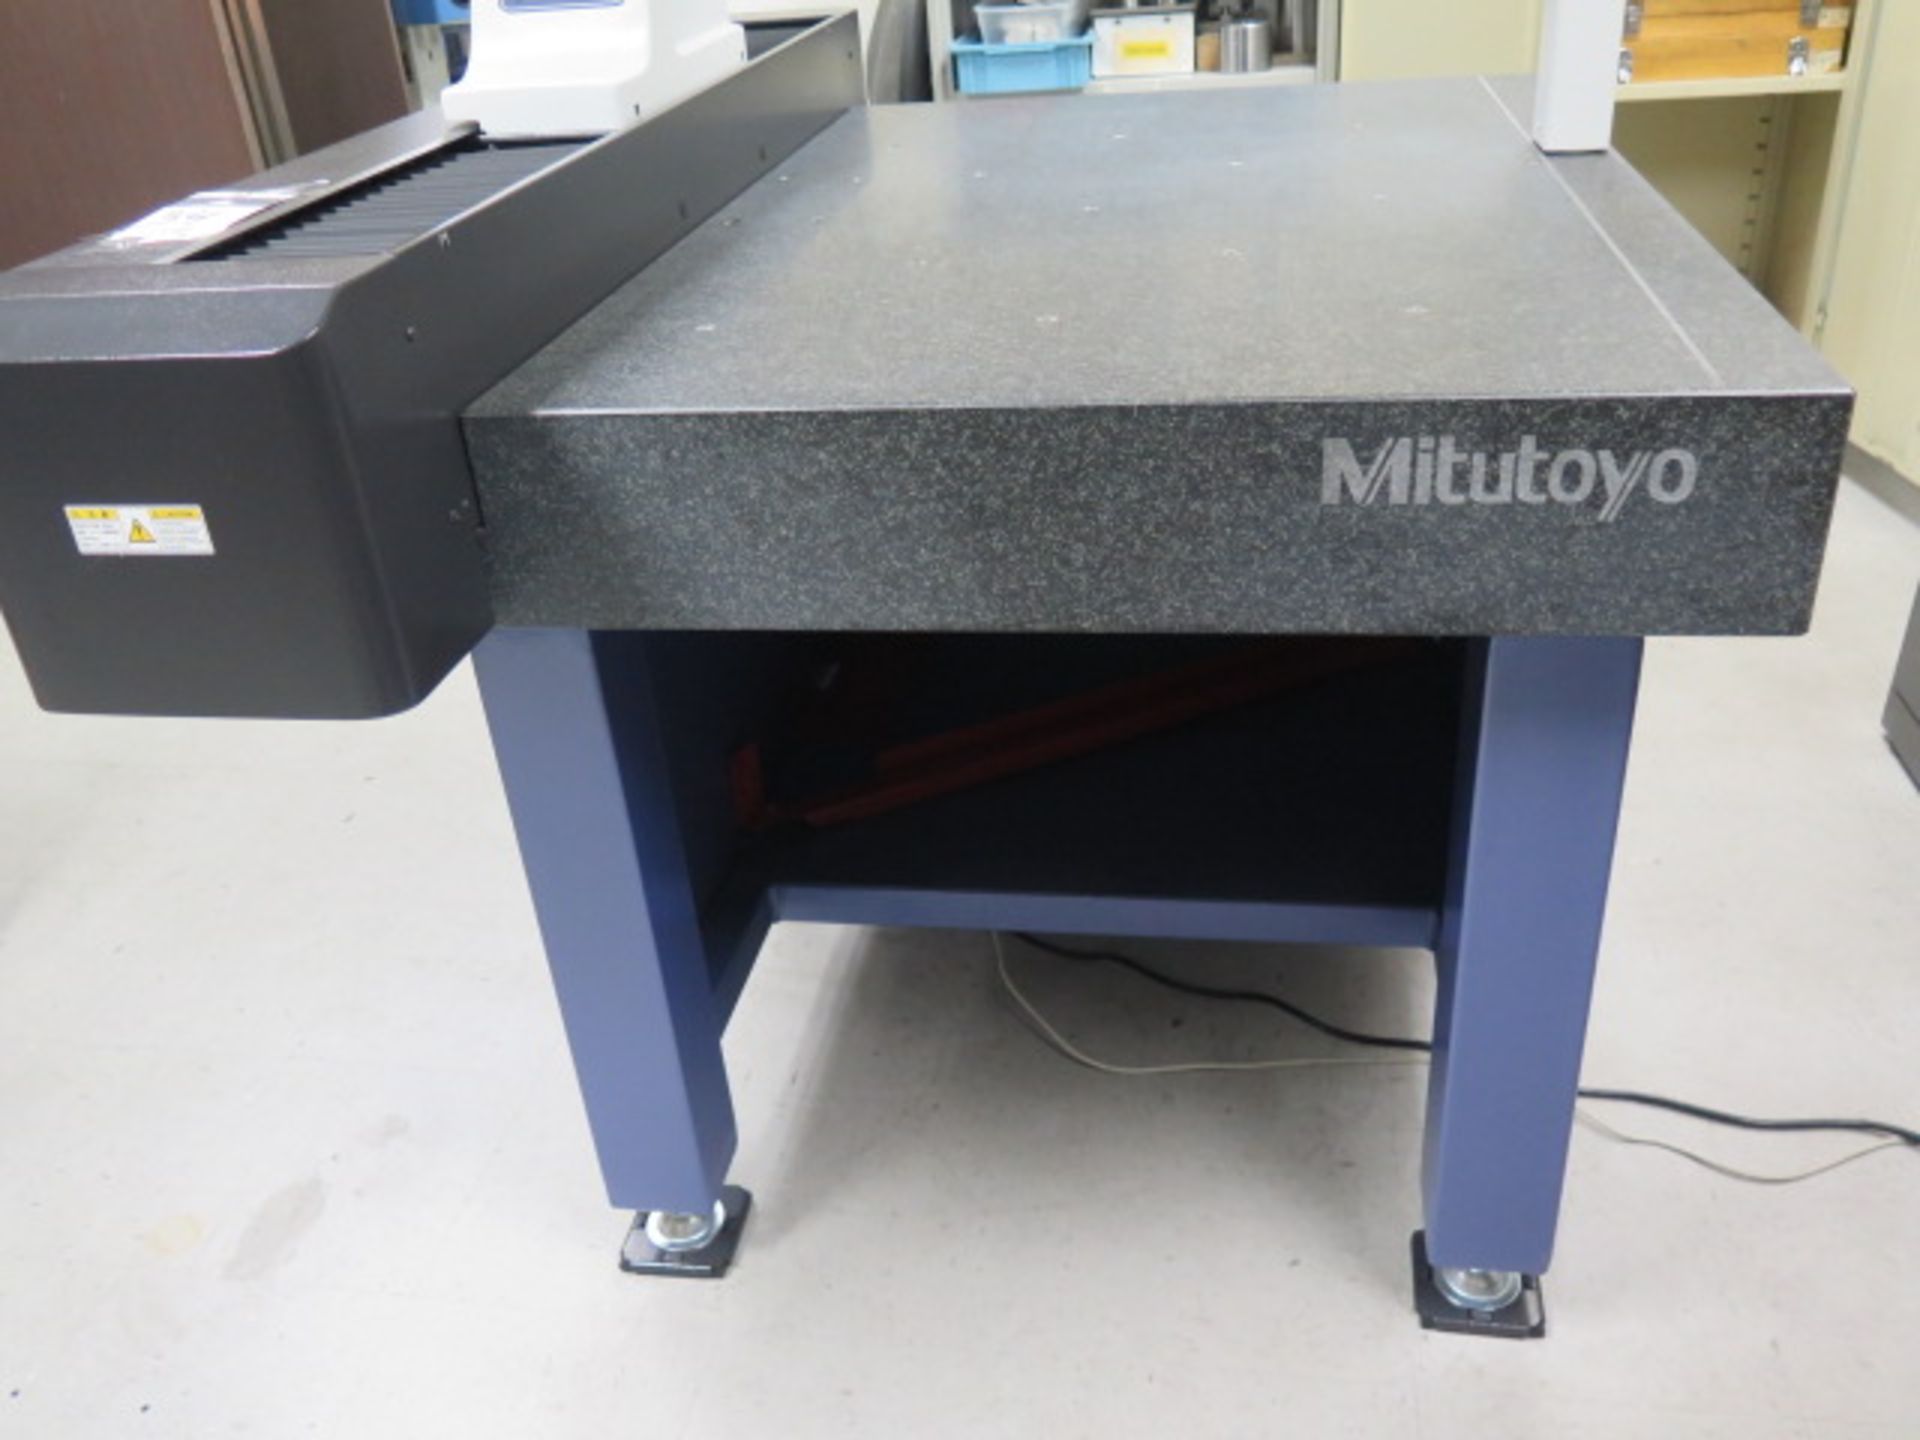 AUG/2019 Mitutoyo Crysta-Plus M574 CMM Machine s/n 00941810 w/ Renishaw MH20i Probe Head, 19.7” x - Image 6 of 14